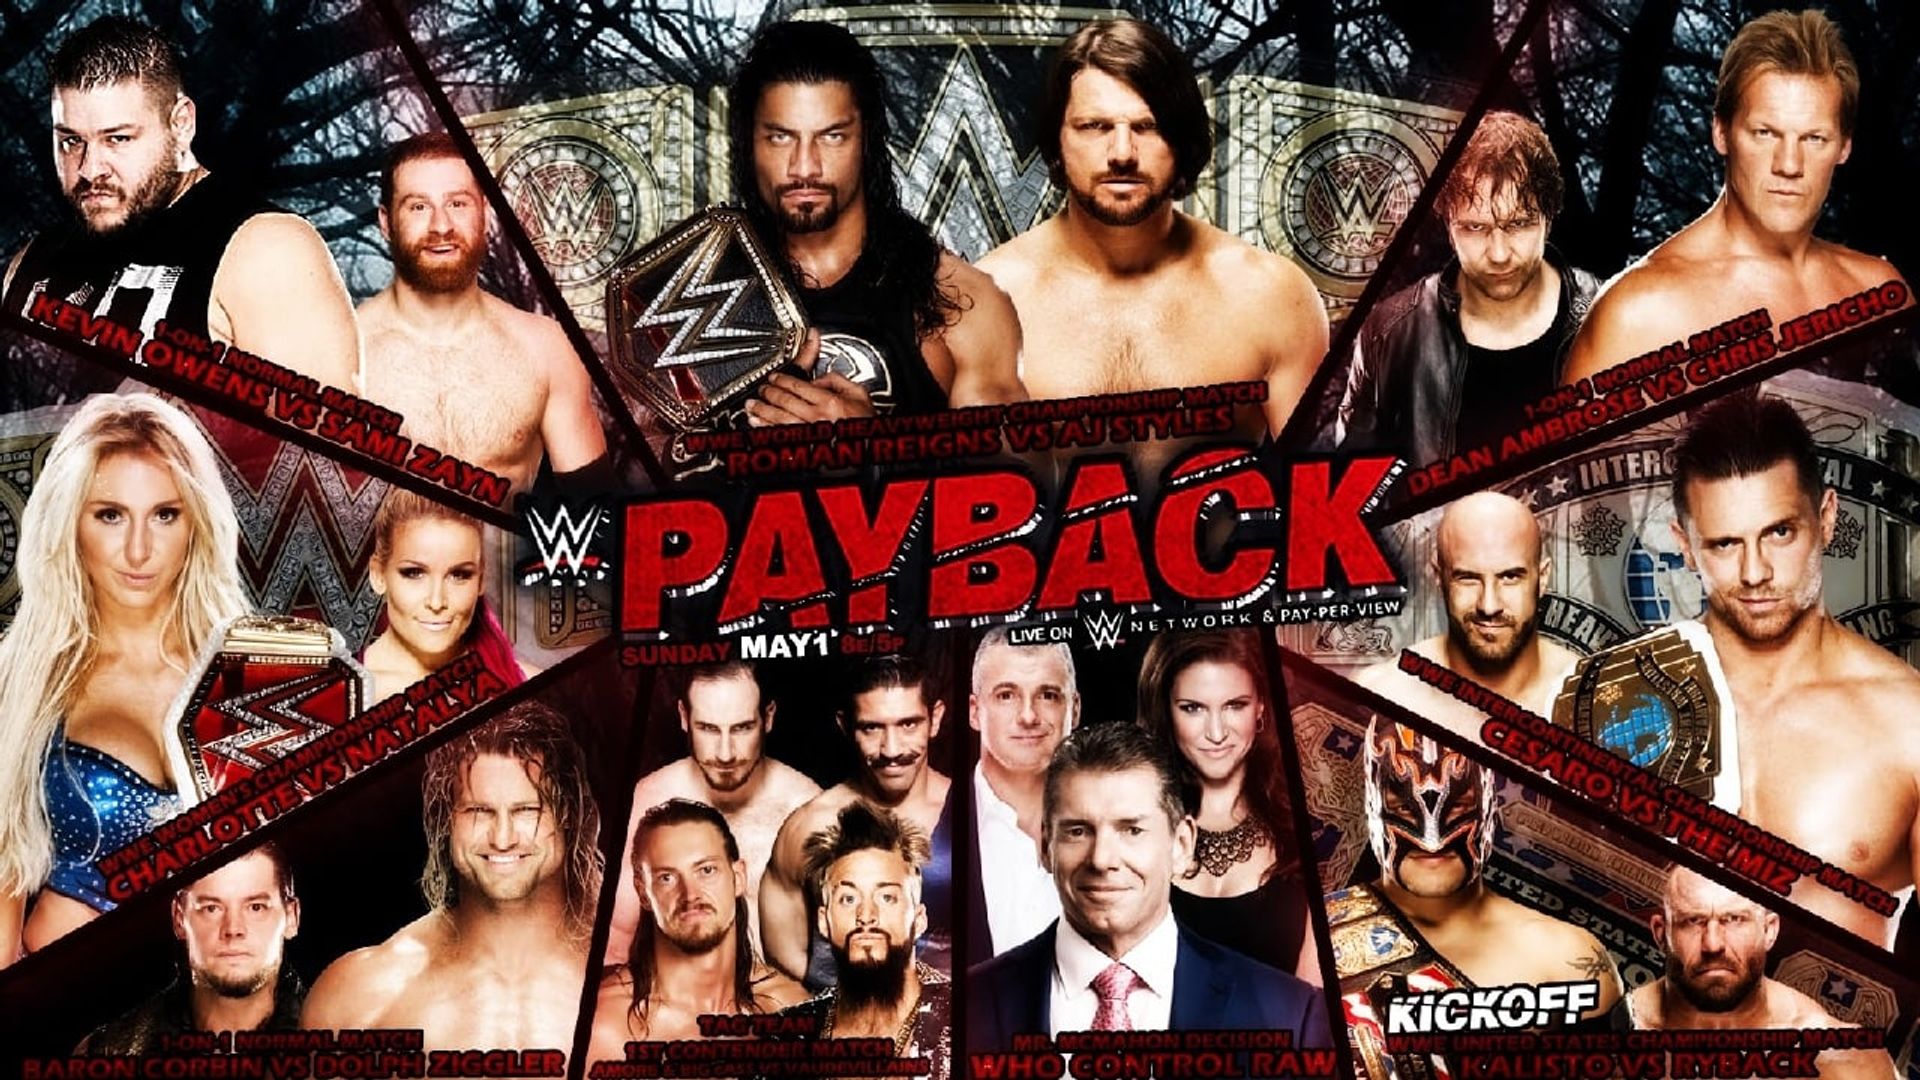 WWE Payback background